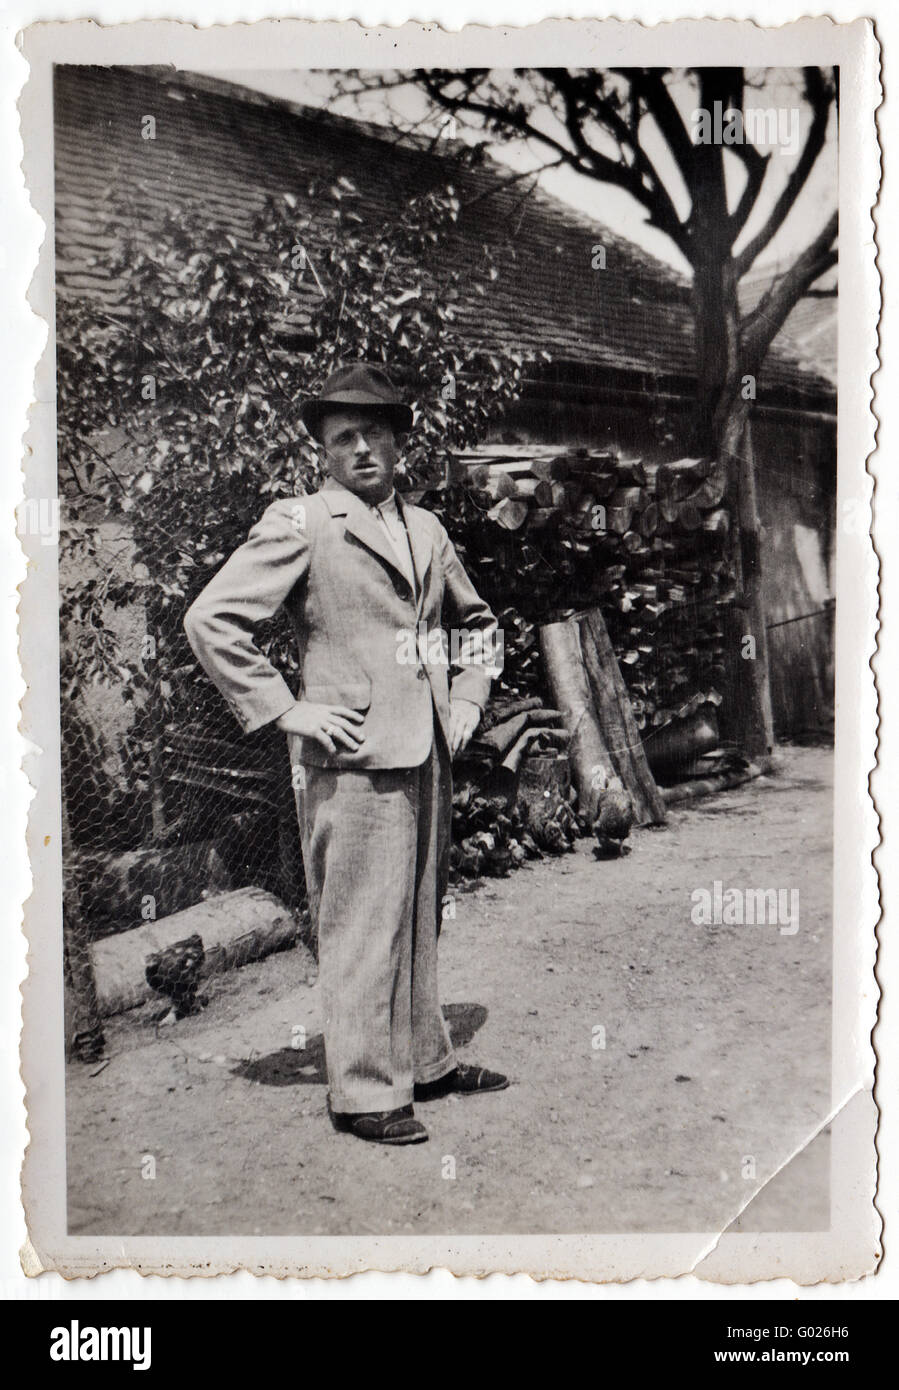 portrait of a man, historic photograph, Stock Photo